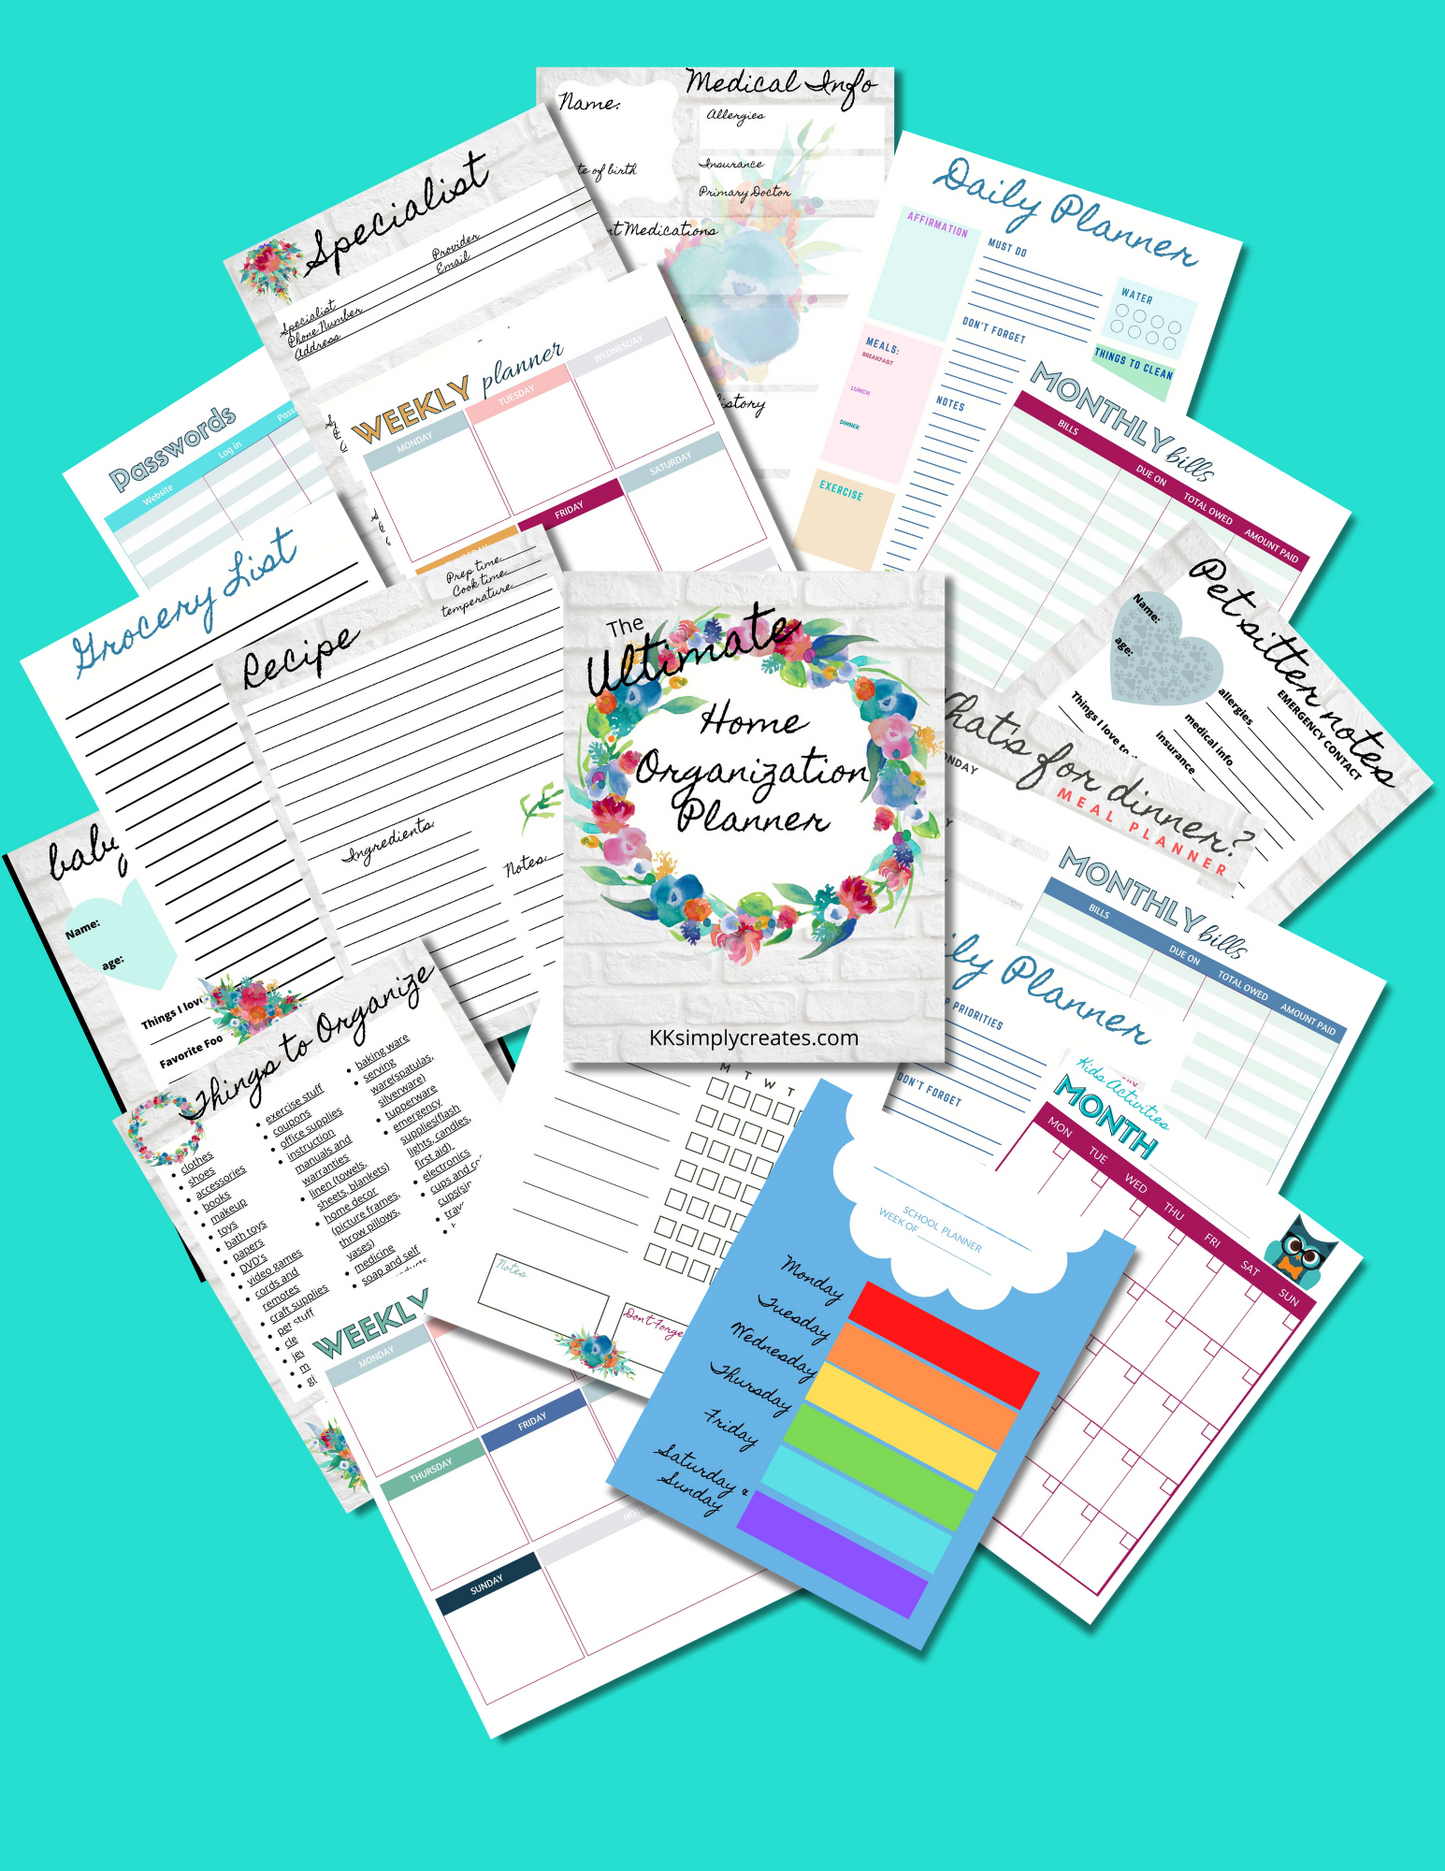 Simplify Life Bundle- Planner Printable download